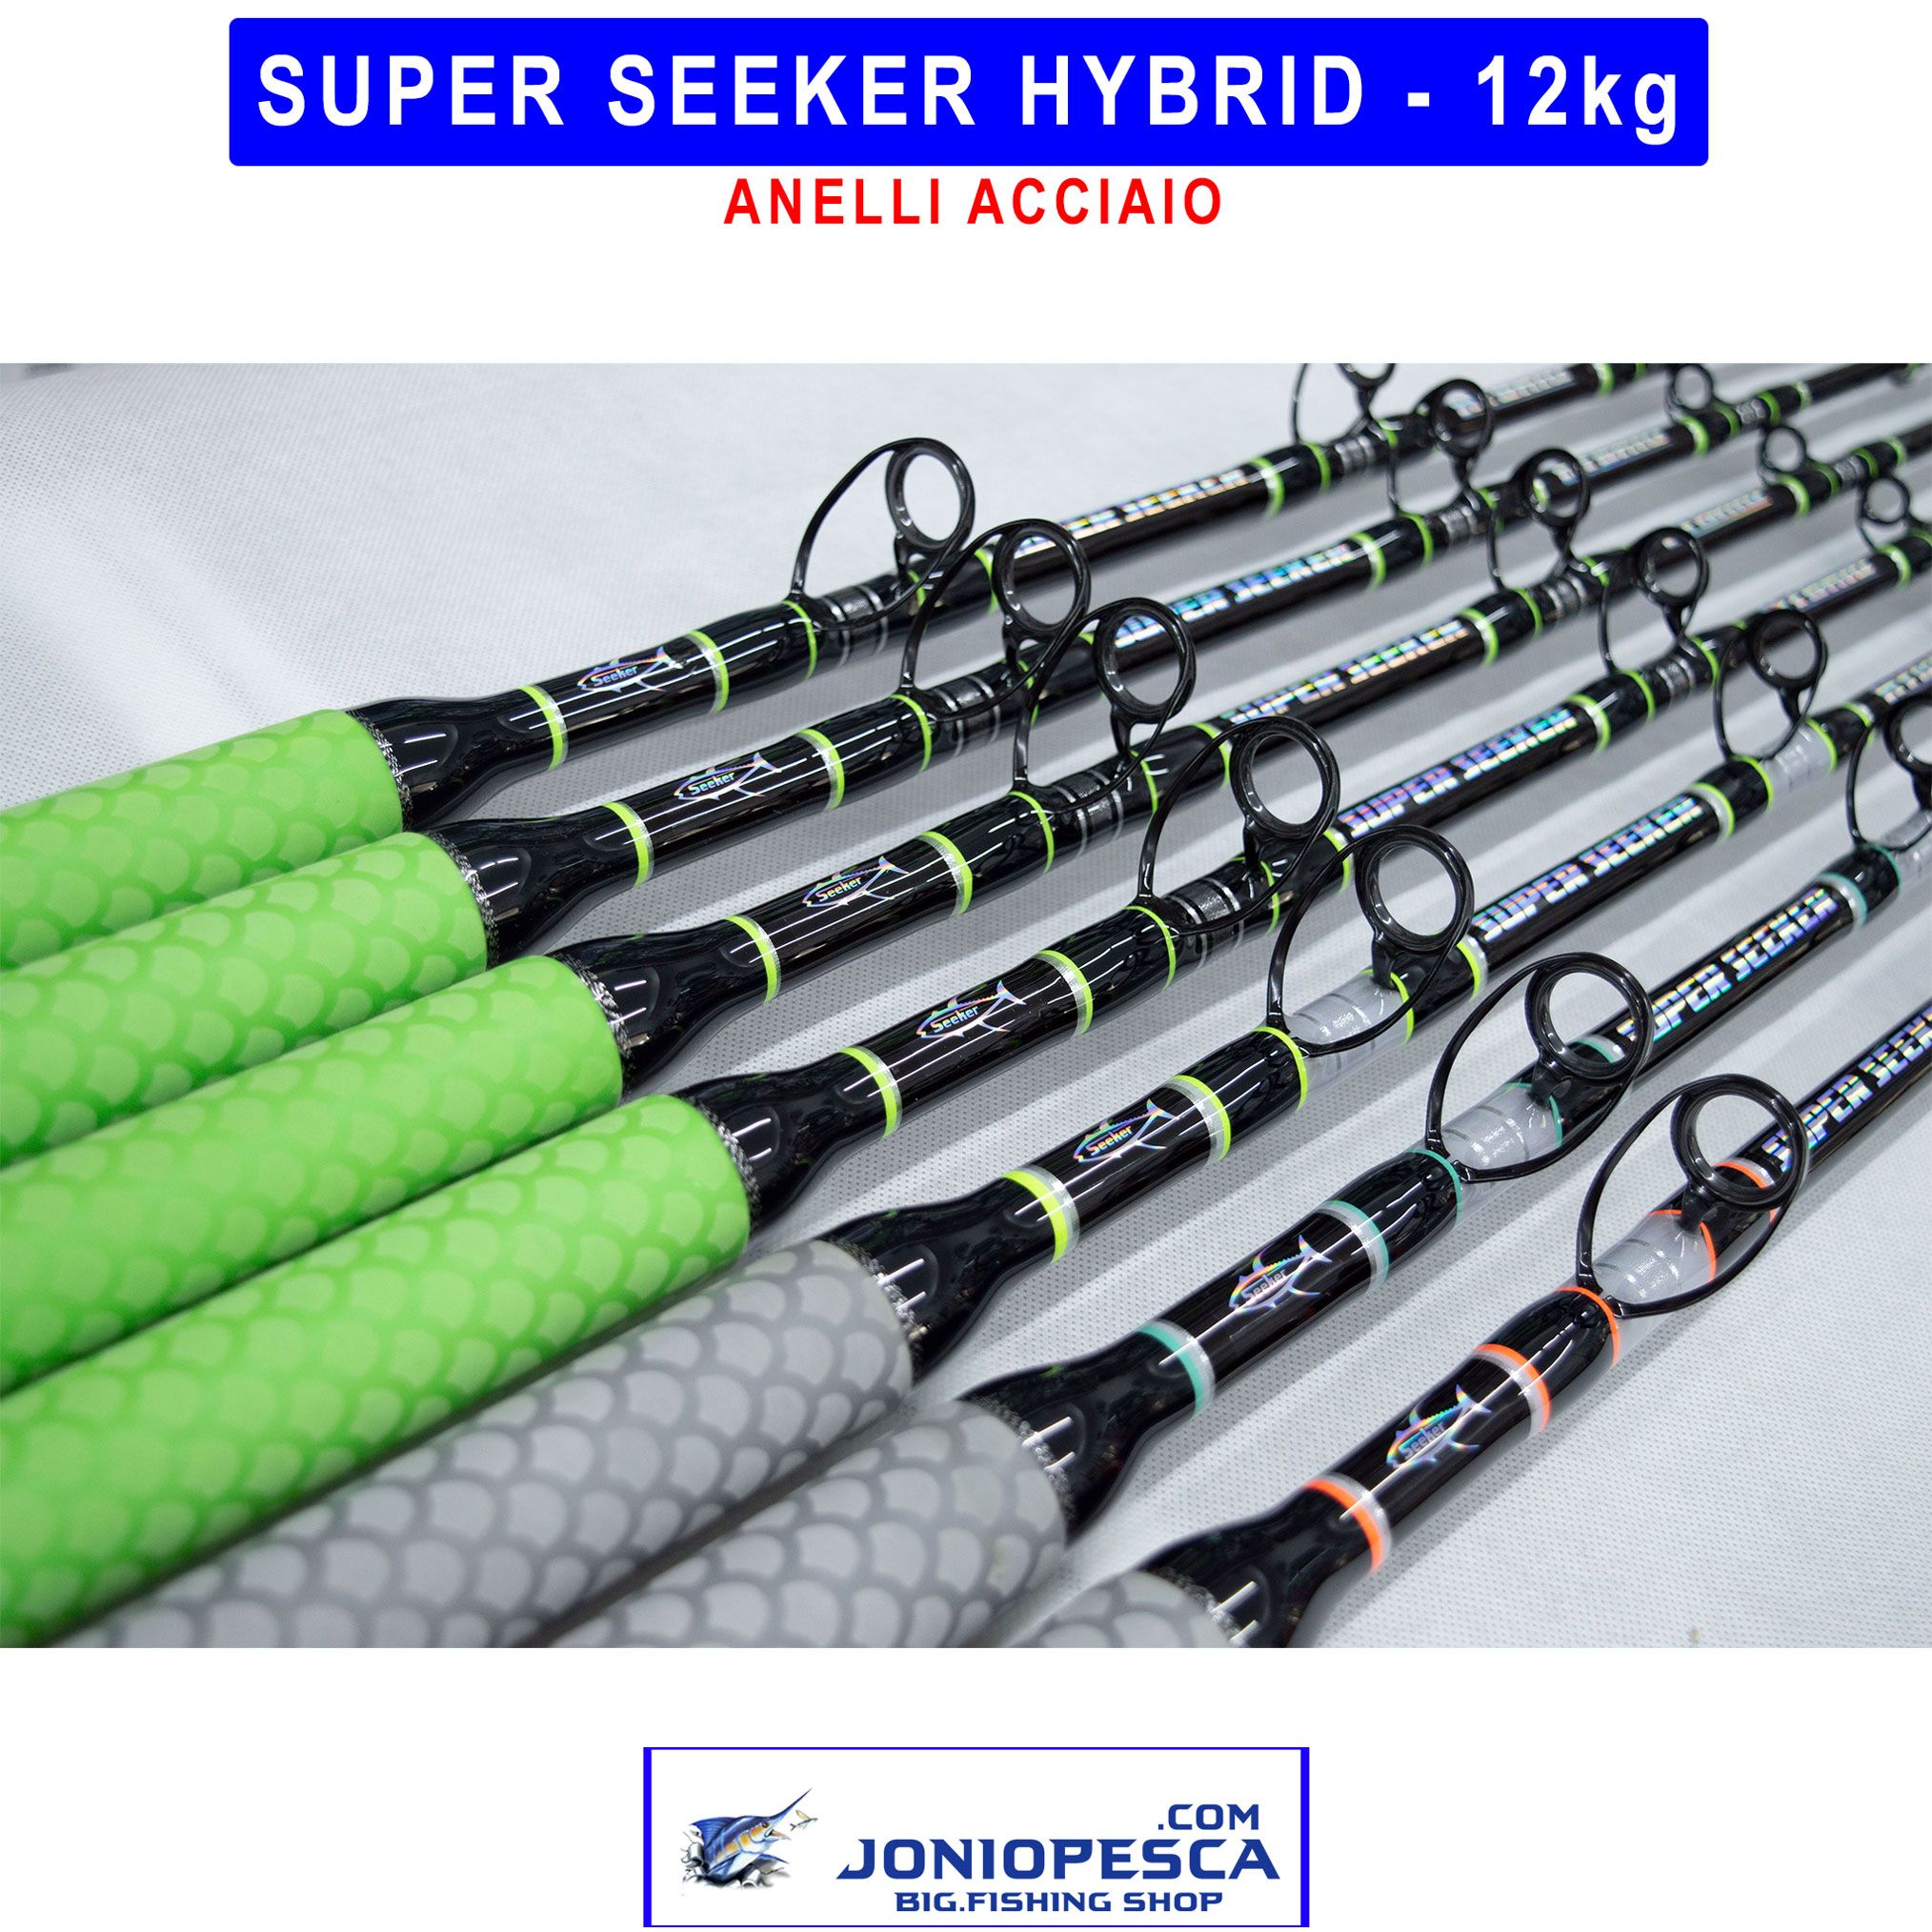 super-seeker-hybrid-12kg-anelli-acciaio-2